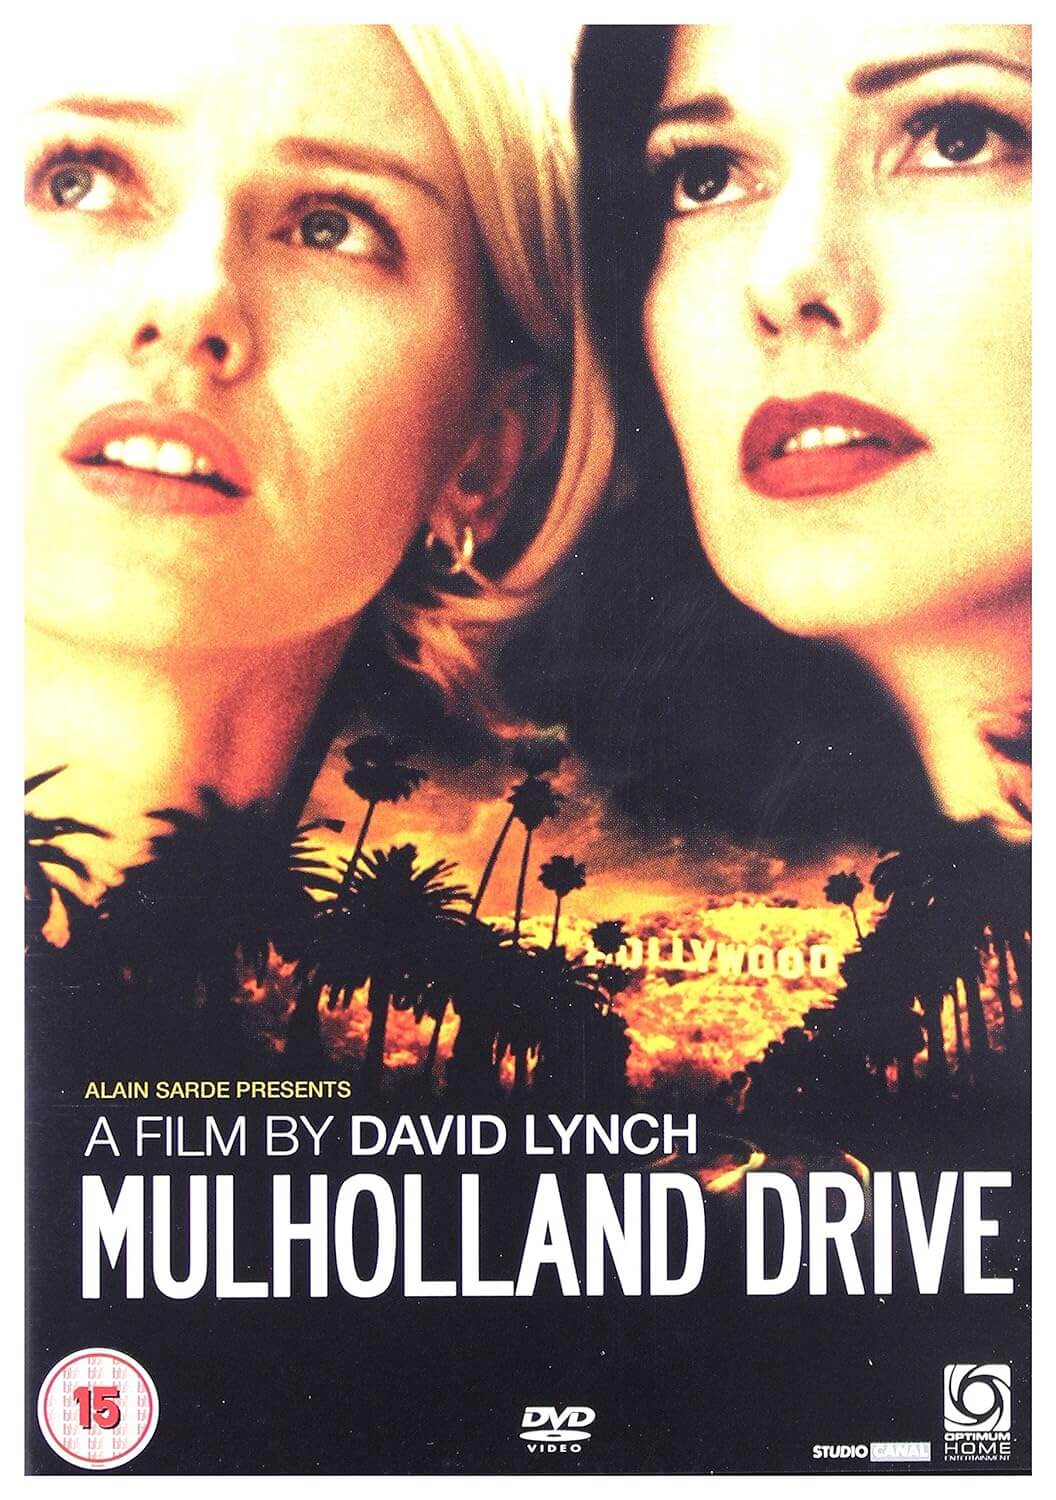 "Mulholland Drive" (2001)